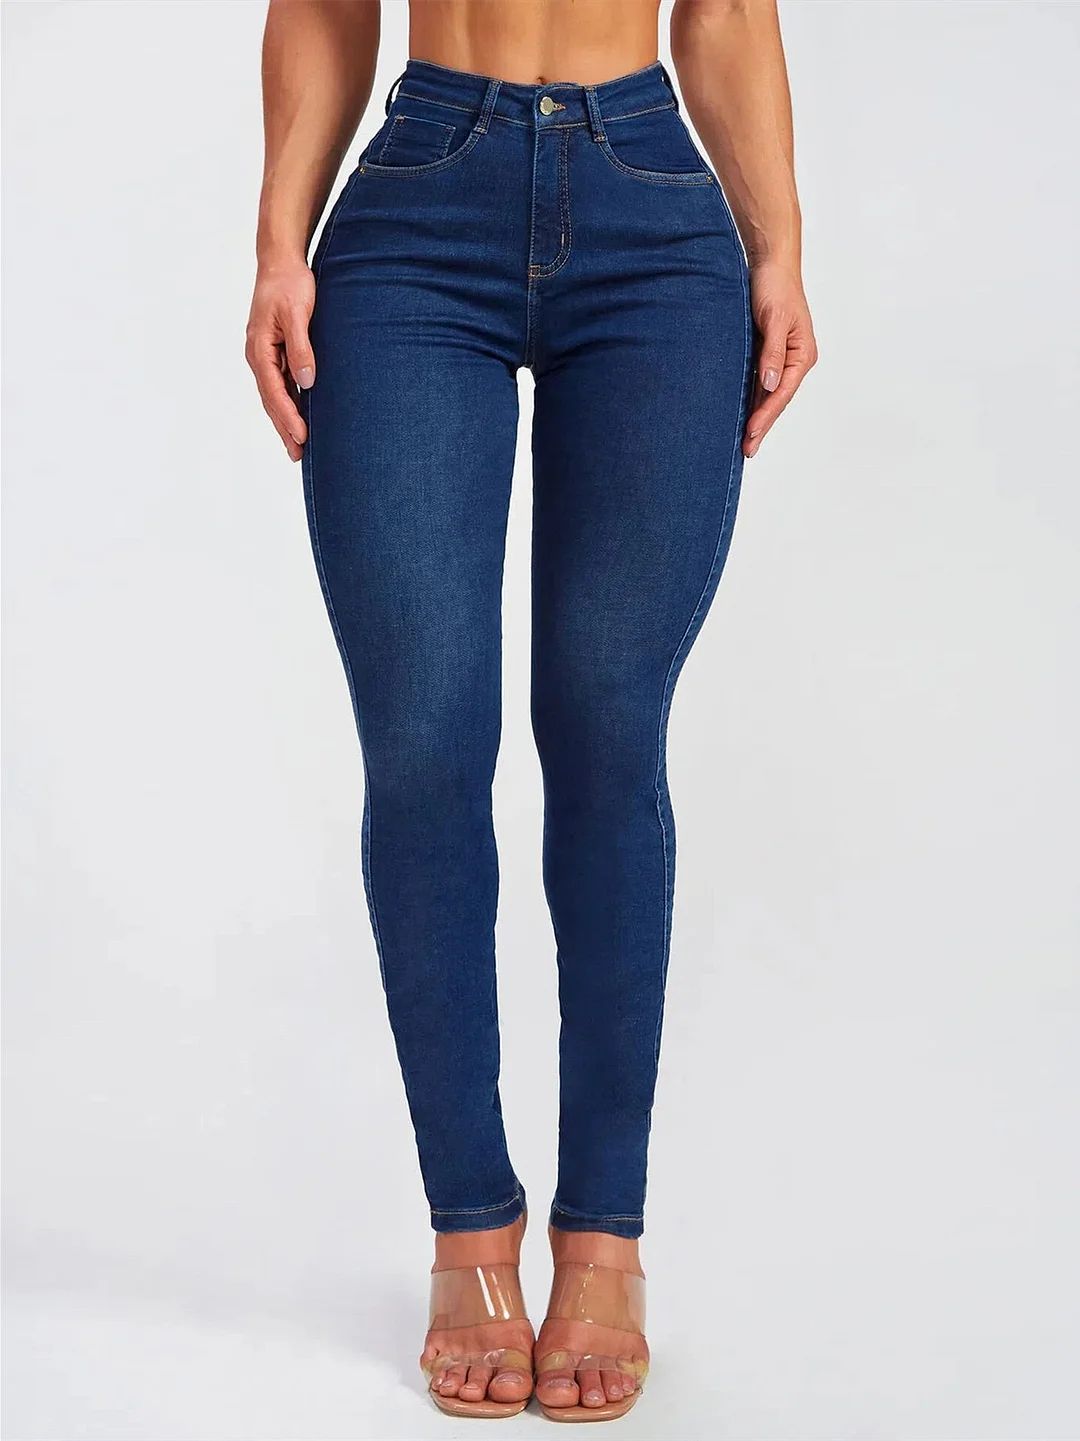 Women plus size clothing Women's Slim Fit Pencil Stretch High Waist Jeans Pants-Nordswear